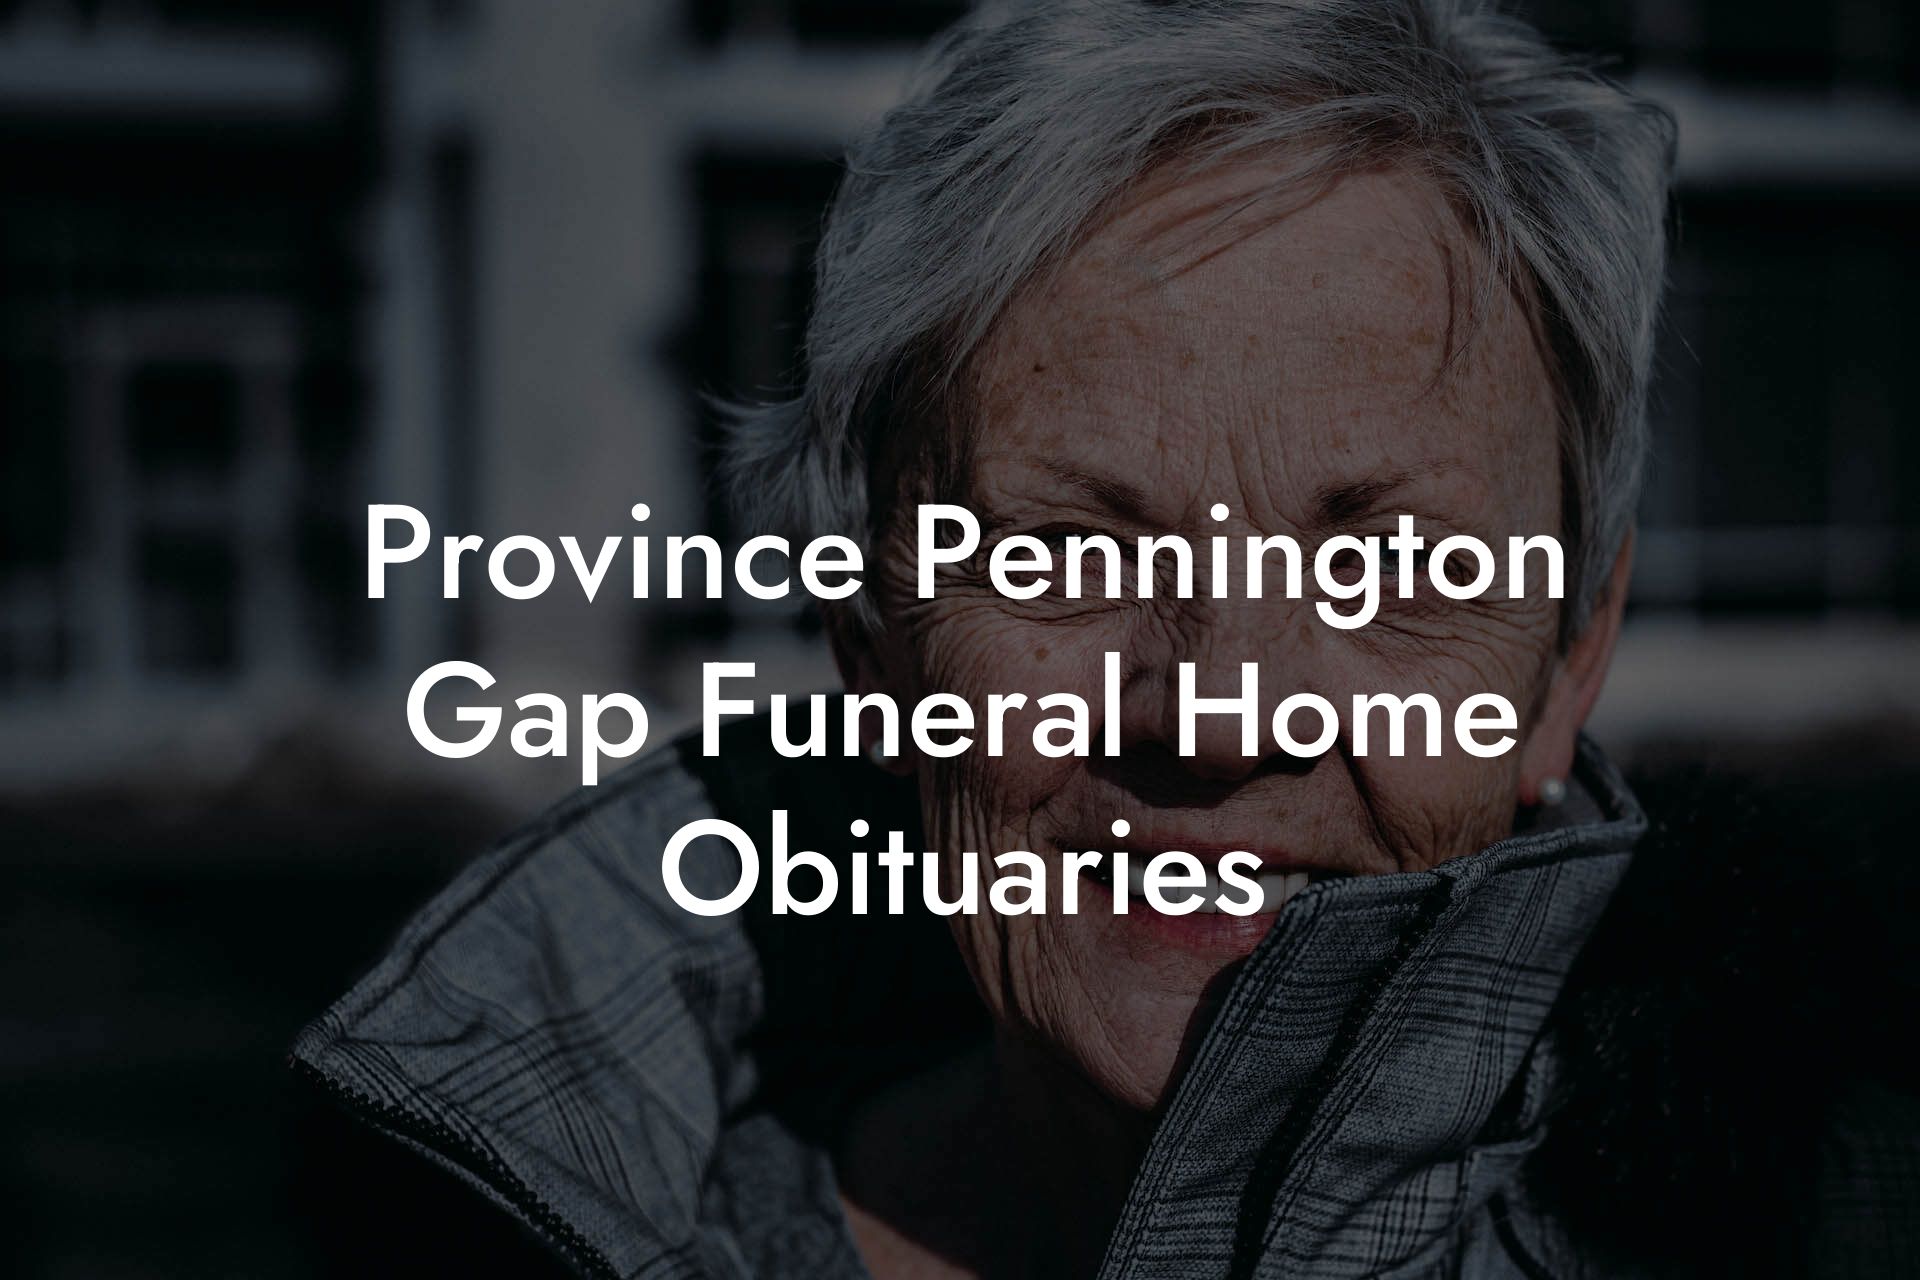 Province Pennington Gap Funeral Home Obituaries